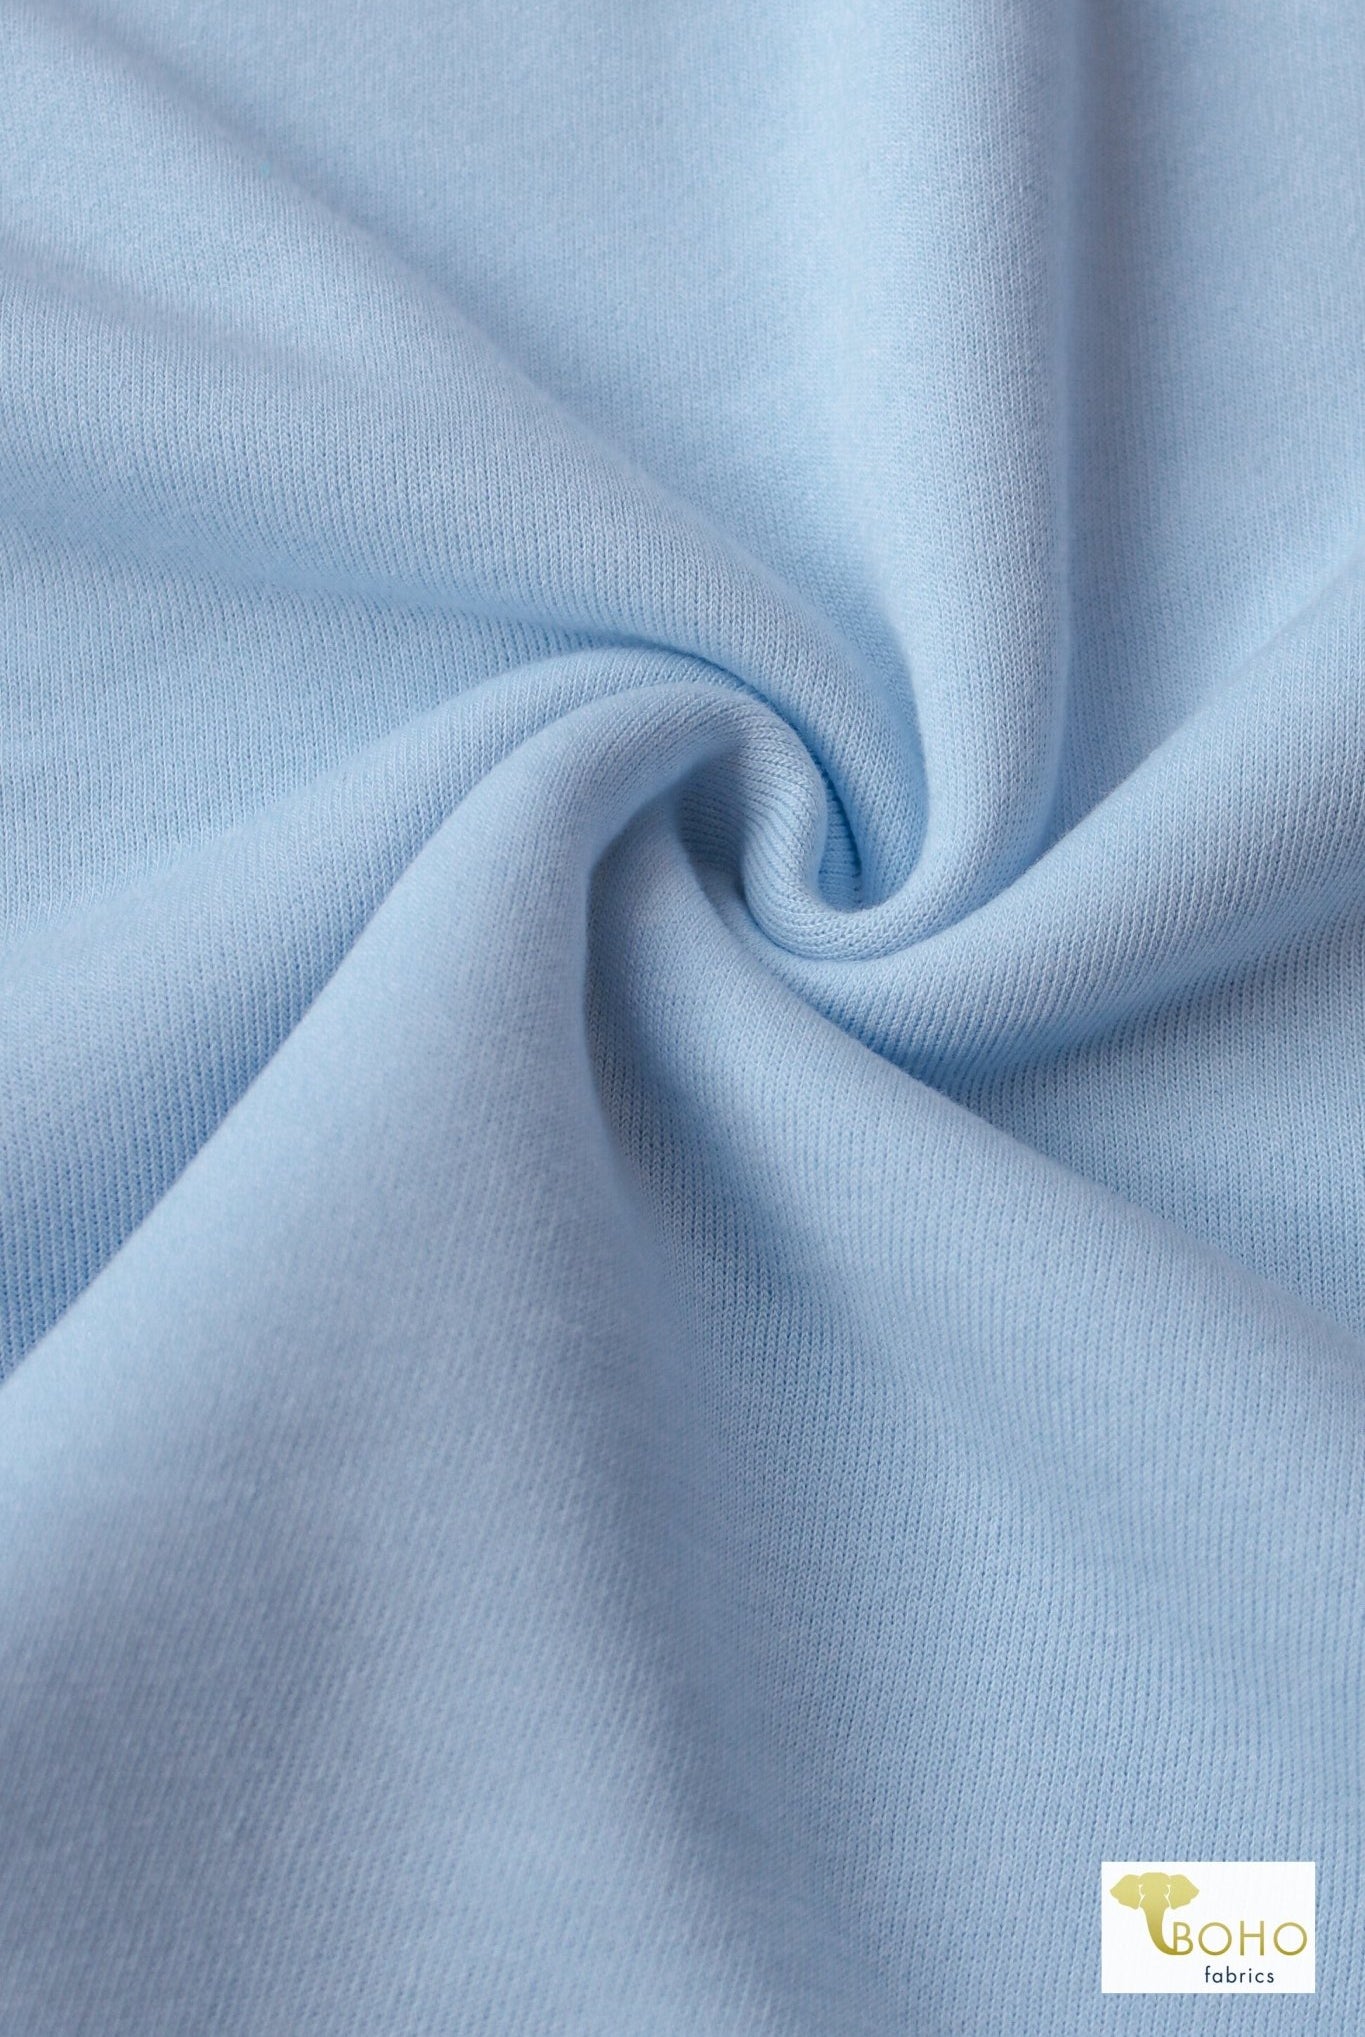 Light Baby Blue, Sweatshirt Fleece. - Boho Fabrics